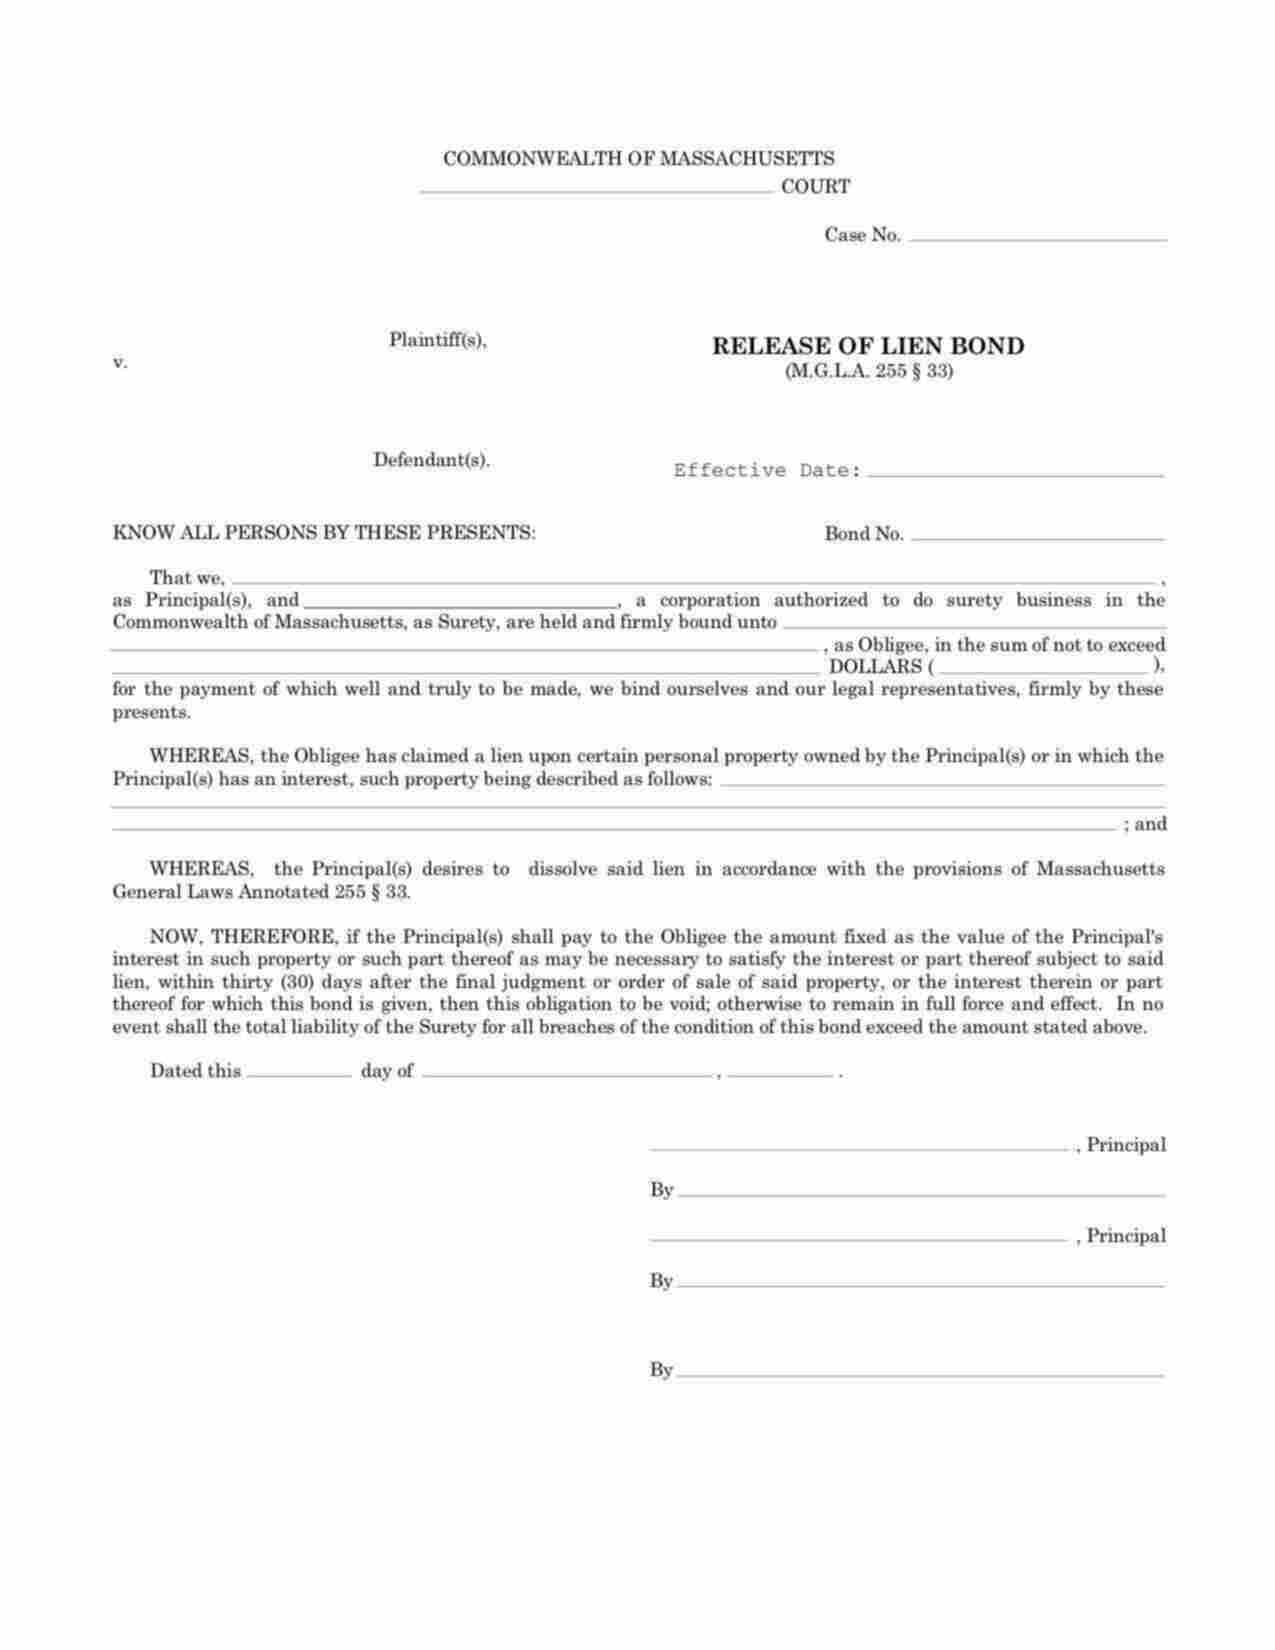 Massachusetts Release of Lien Bond Form